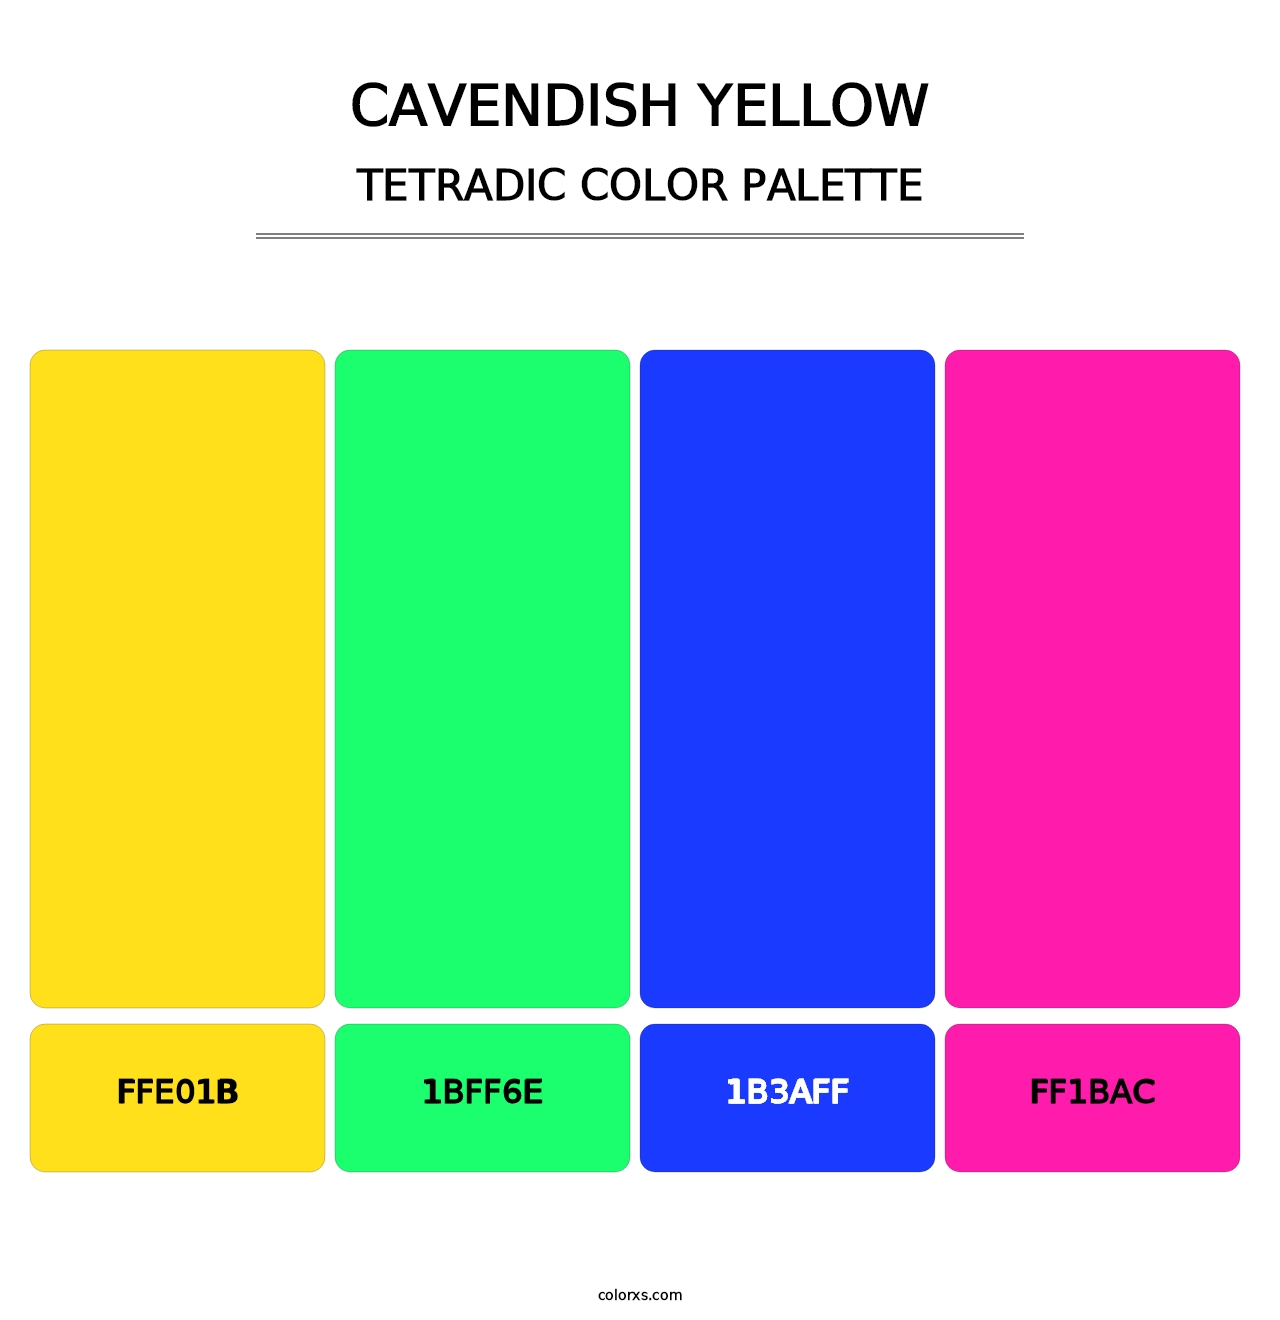 Cavendish Yellow - Tetradic Color Palette